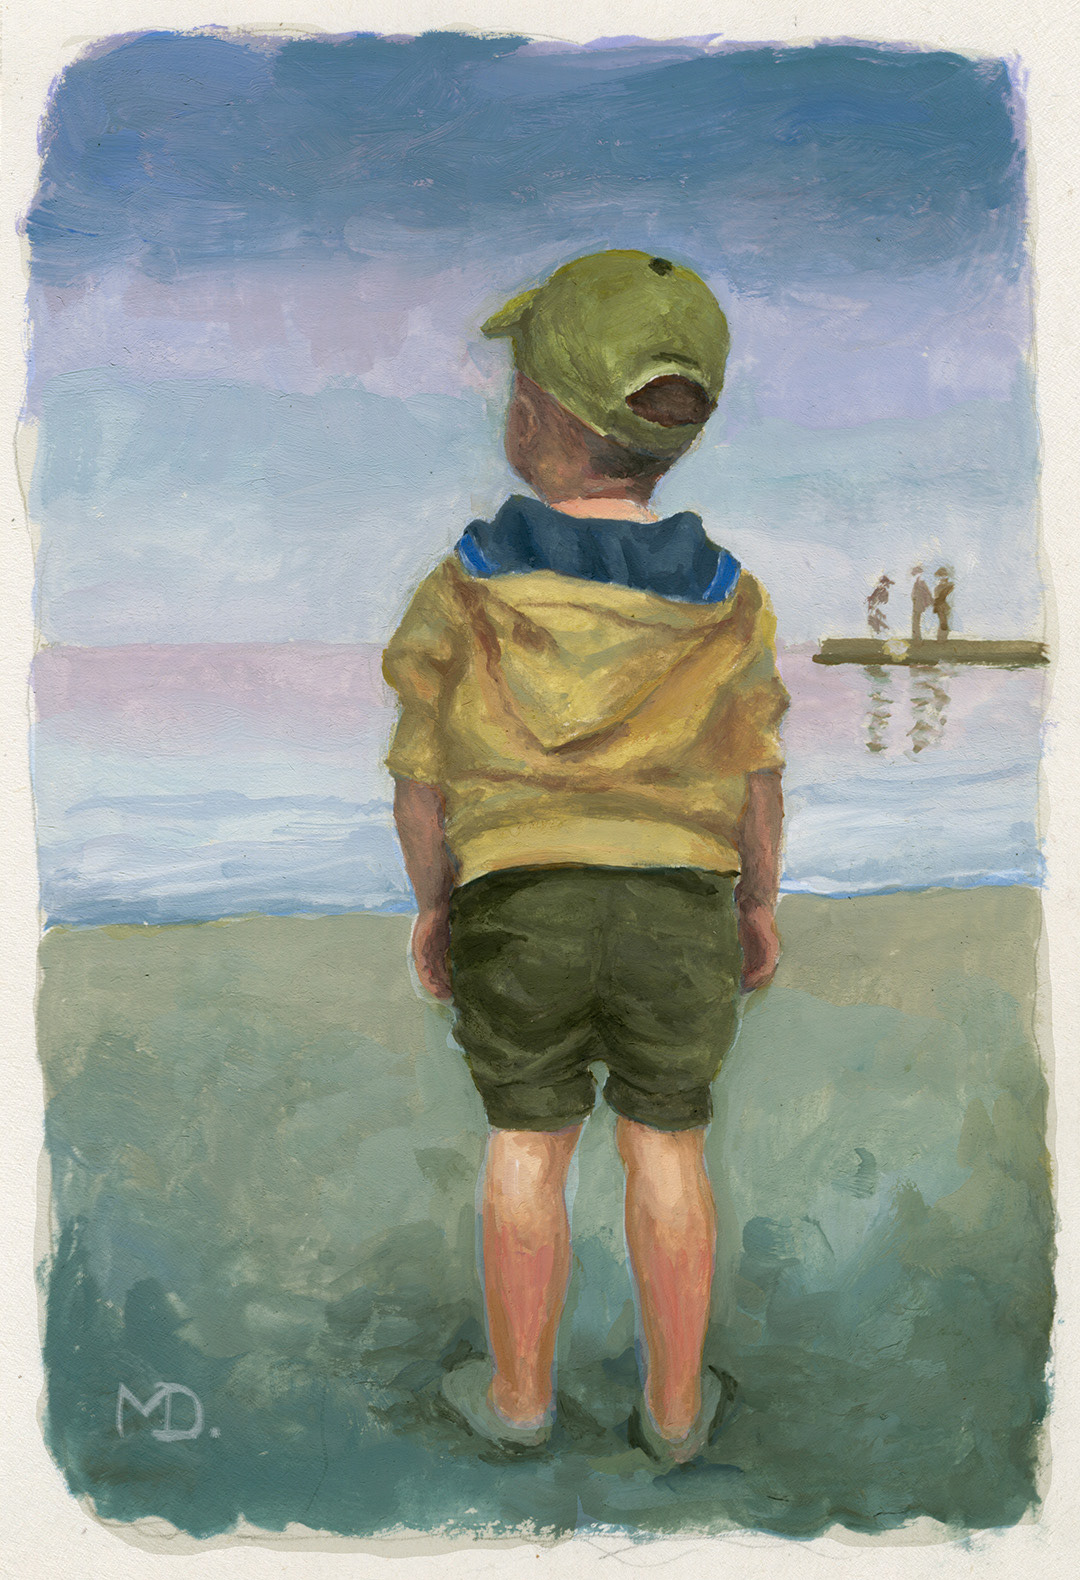 boy portrait children's book gouache mixed techniques Illustrator Artist sea shore life watercolor artwork